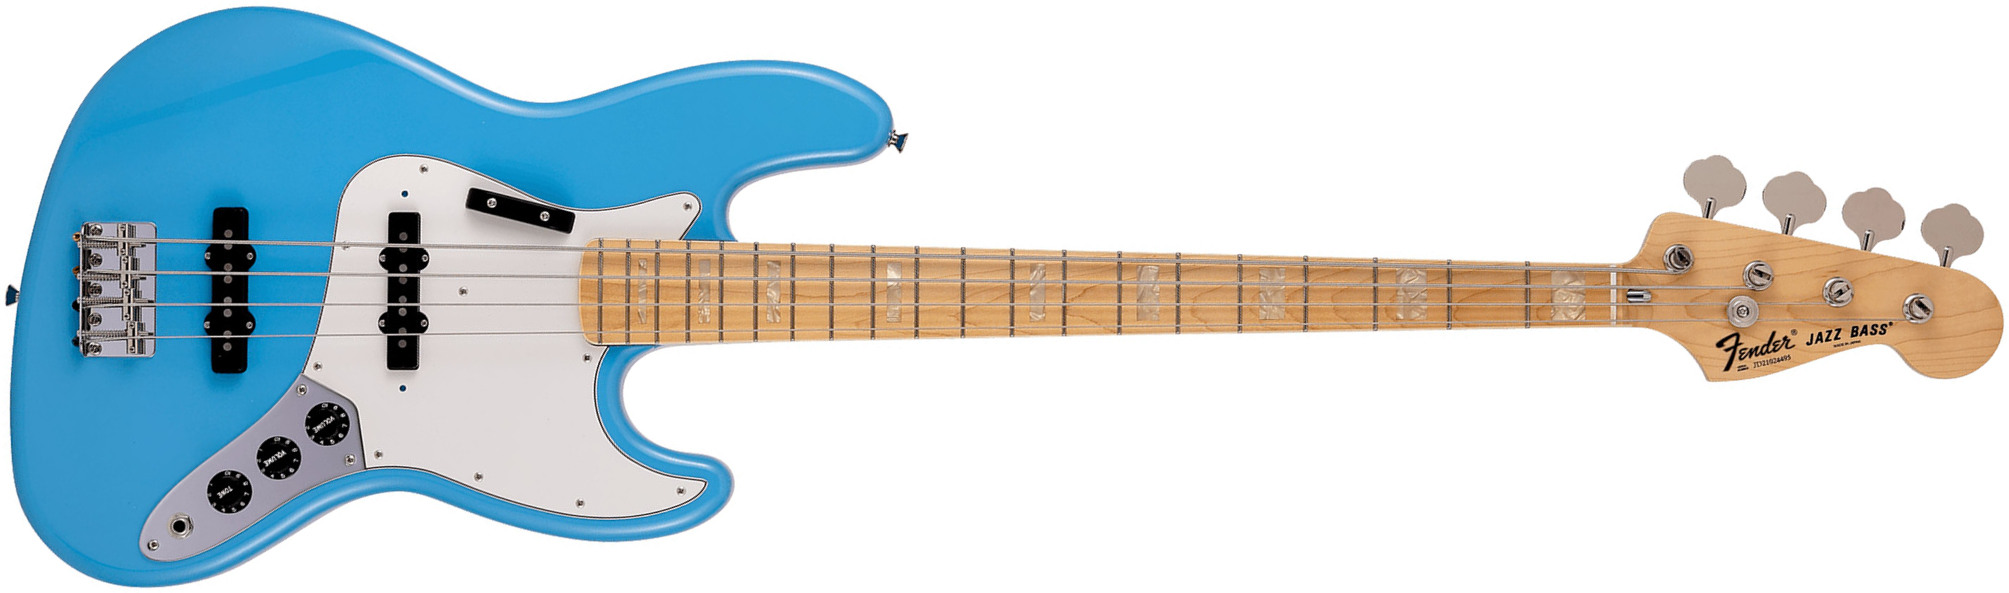 Fender Jazz Bass International Color Ltd Jap Mn - Maui Blue - Solidbody E-bass - Main picture